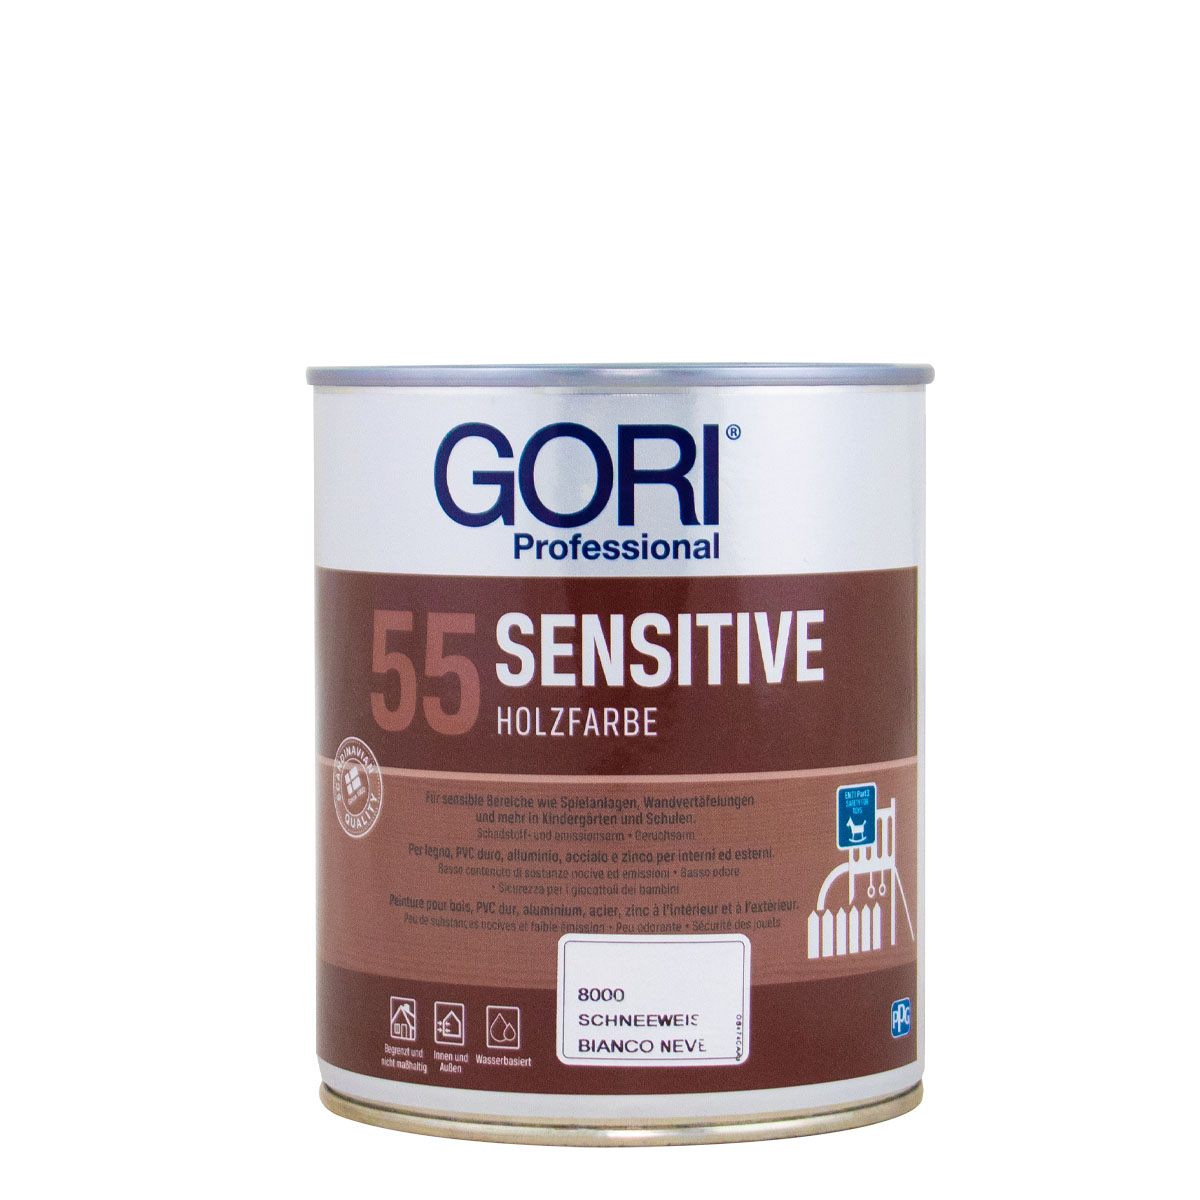 Gori 55 Sensitive Holzfarbe 0,75L, 8000 schneeweiss